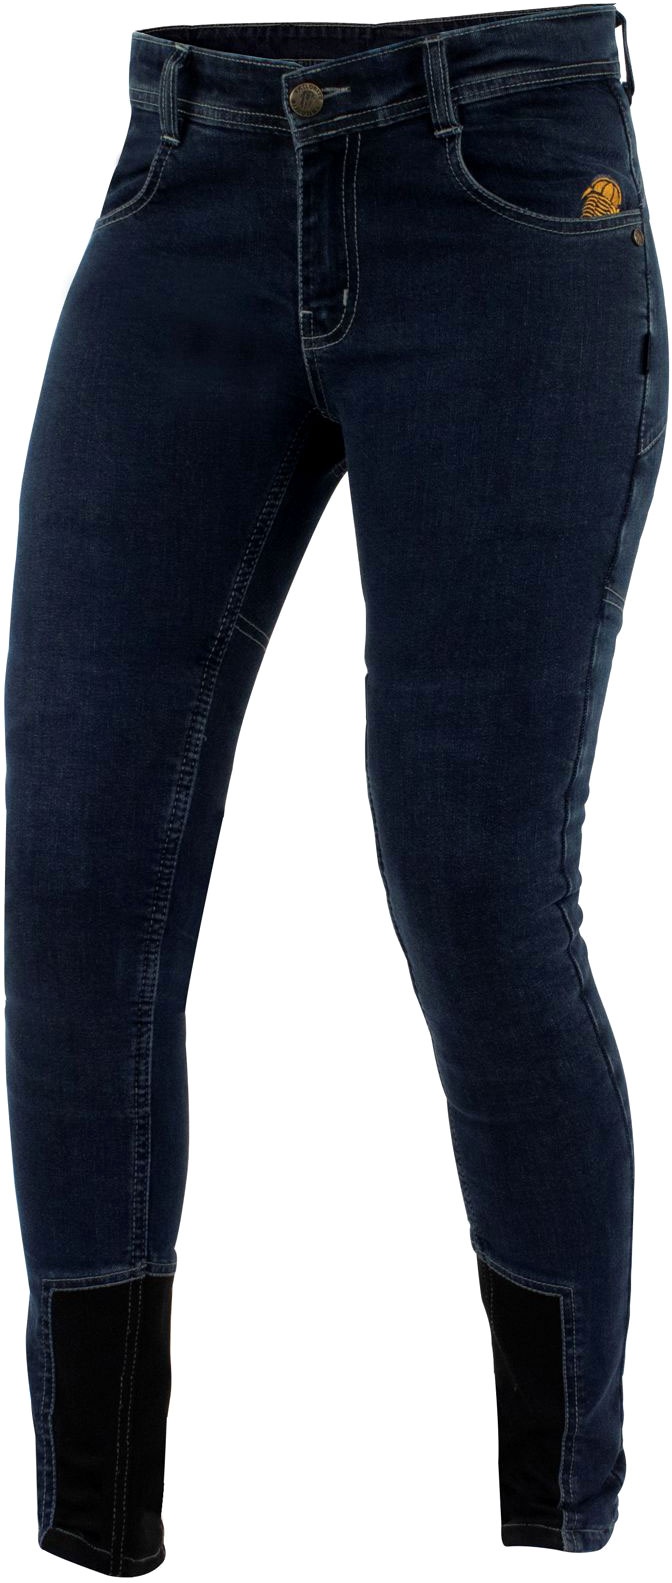 Trilobite All Shape, jeans femmes - Bleu - 26/32